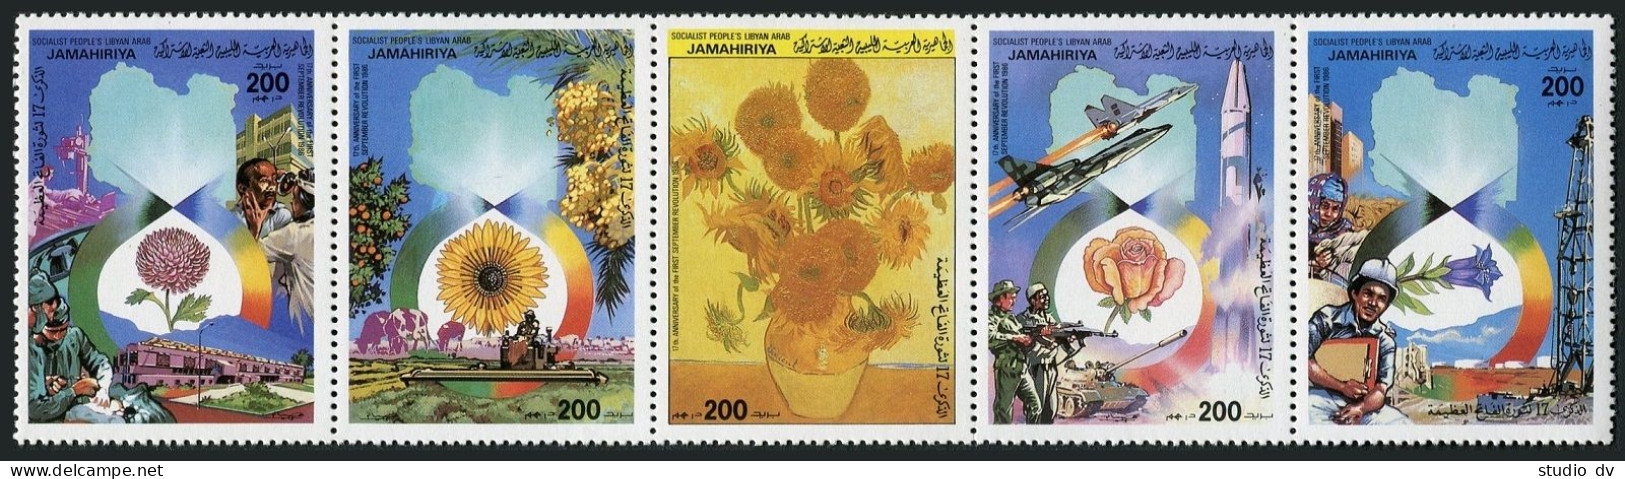 Libya 1316 Ae Strip, MNH. Mi 1481-1485. Revolution-17, 1986. Heath, Flowers, Art - Libye